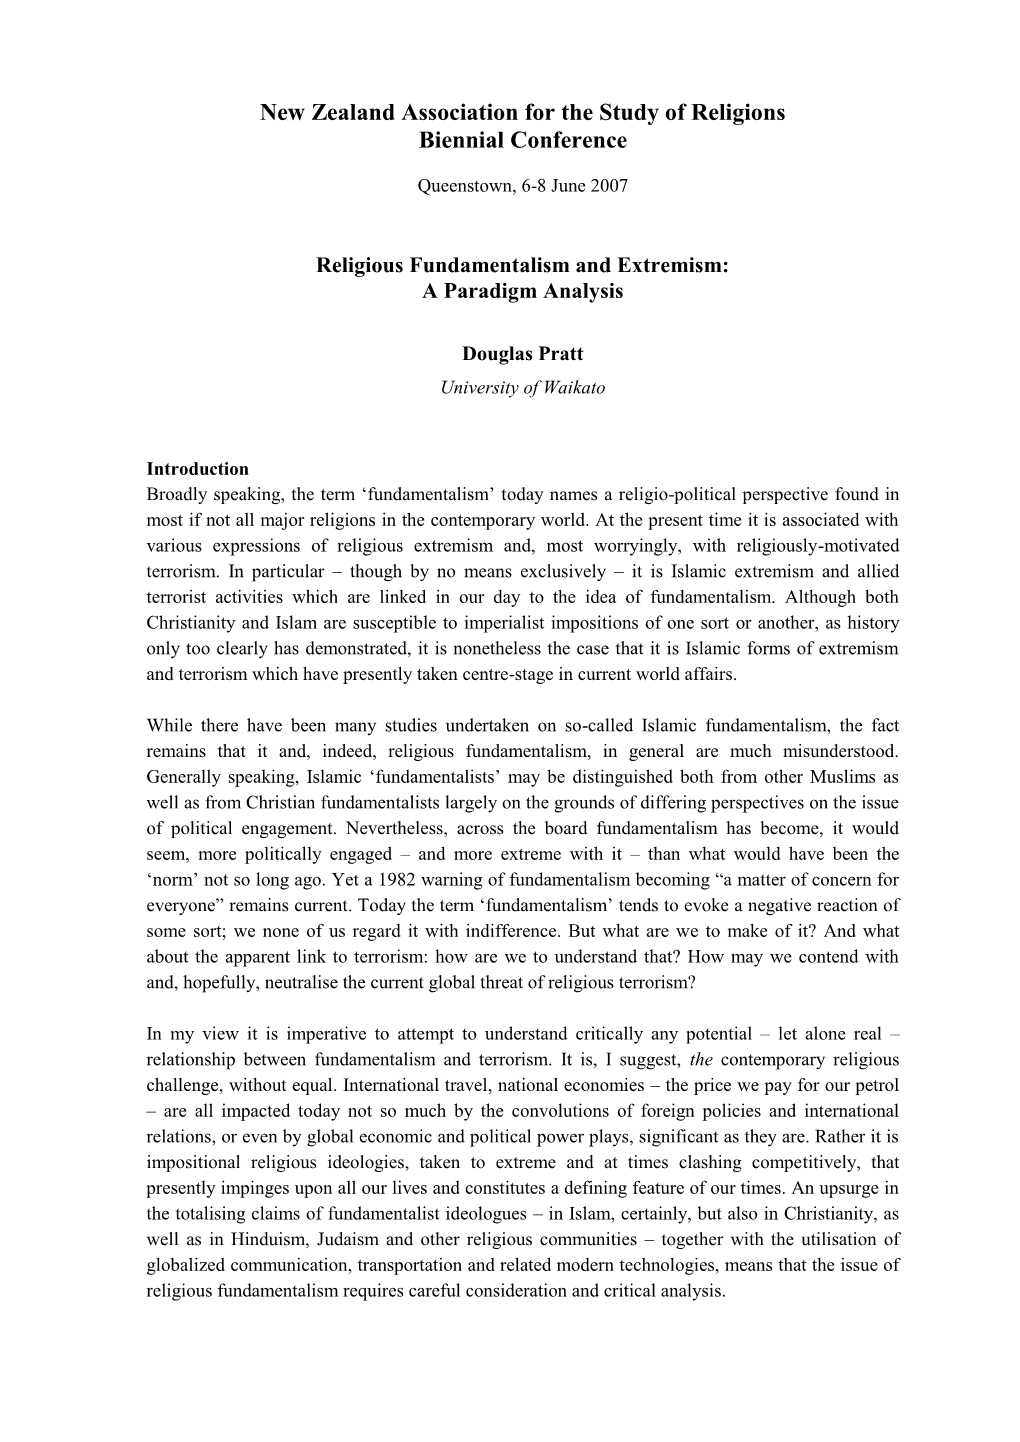 Religious Fundamentalism and Extremism: a Paradigm Analysis